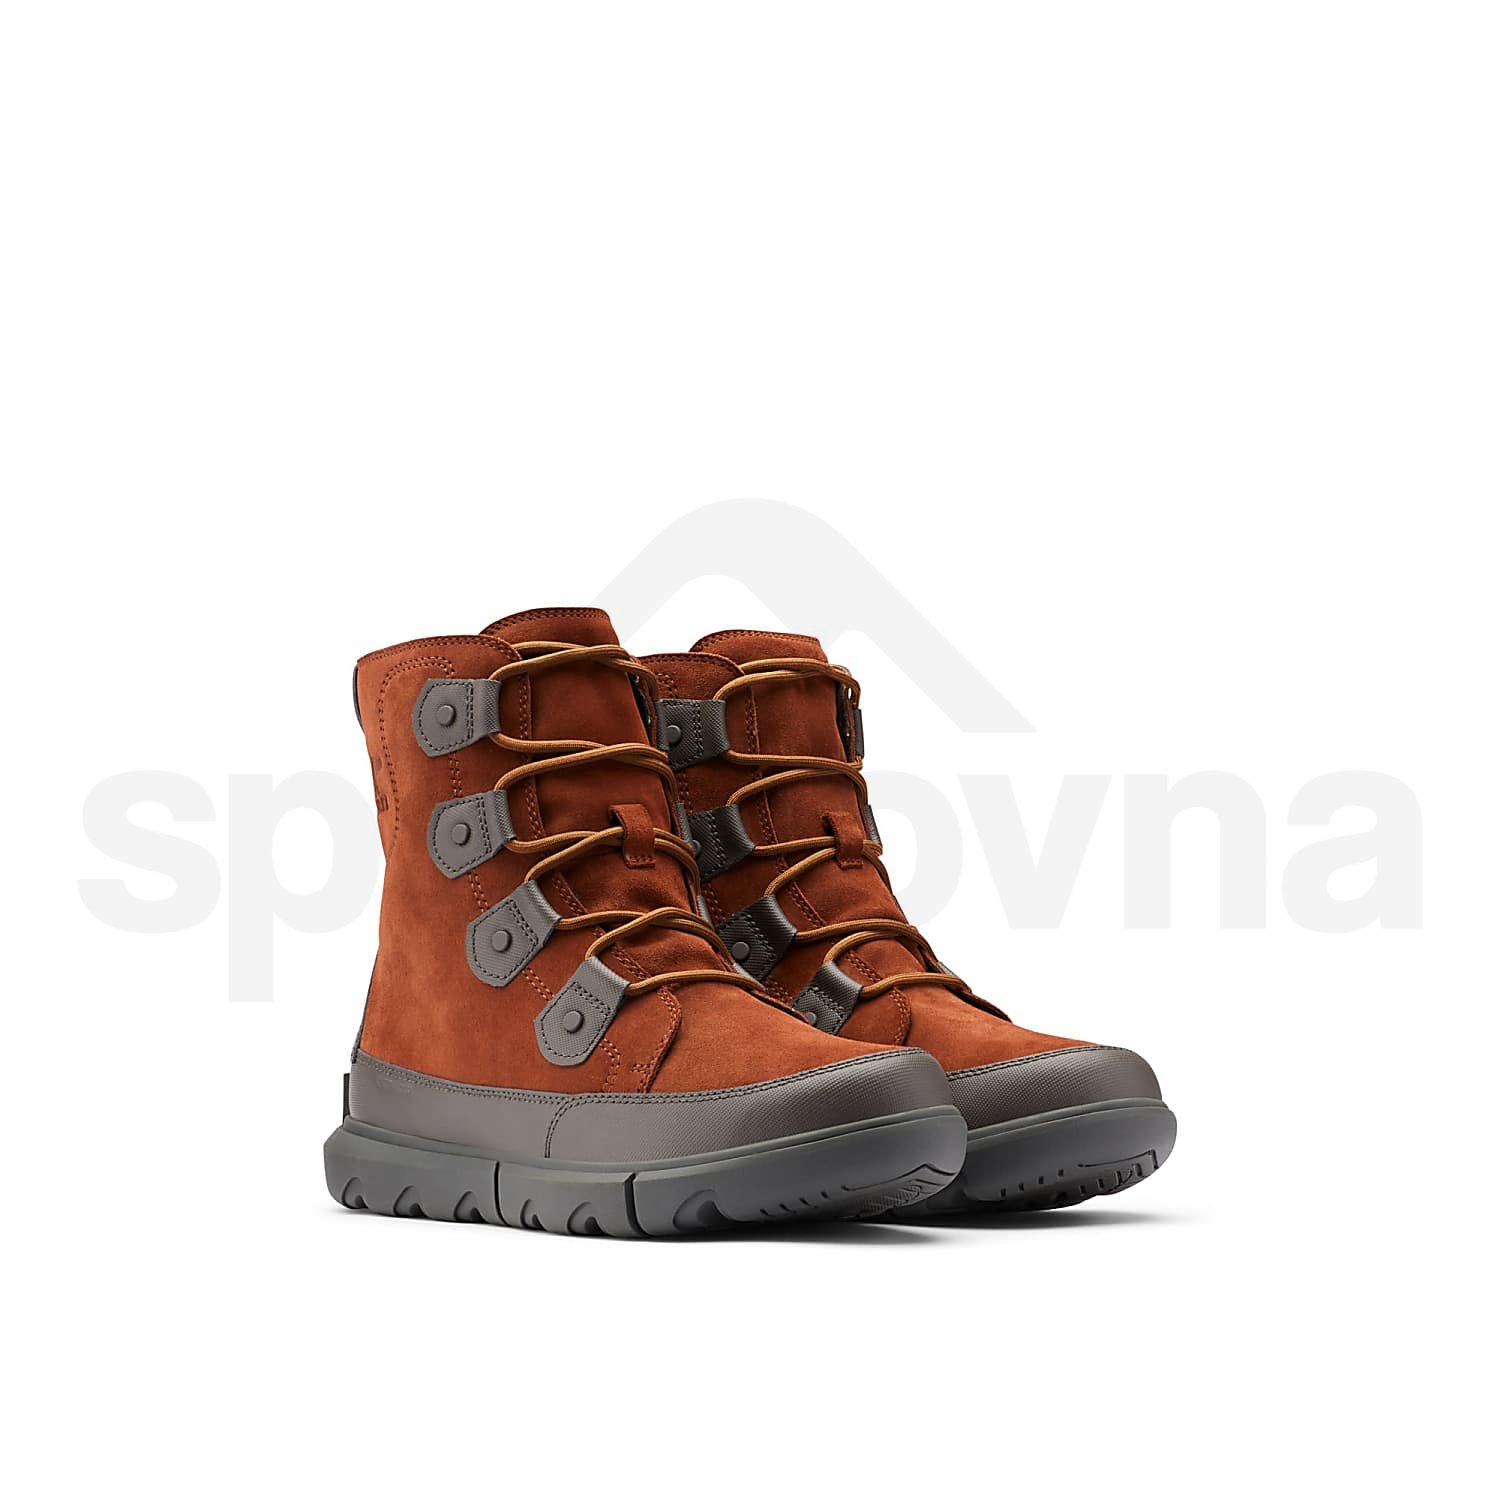 Obuv Sorel Explorer™ Boot WP Man - oranžová/šedá